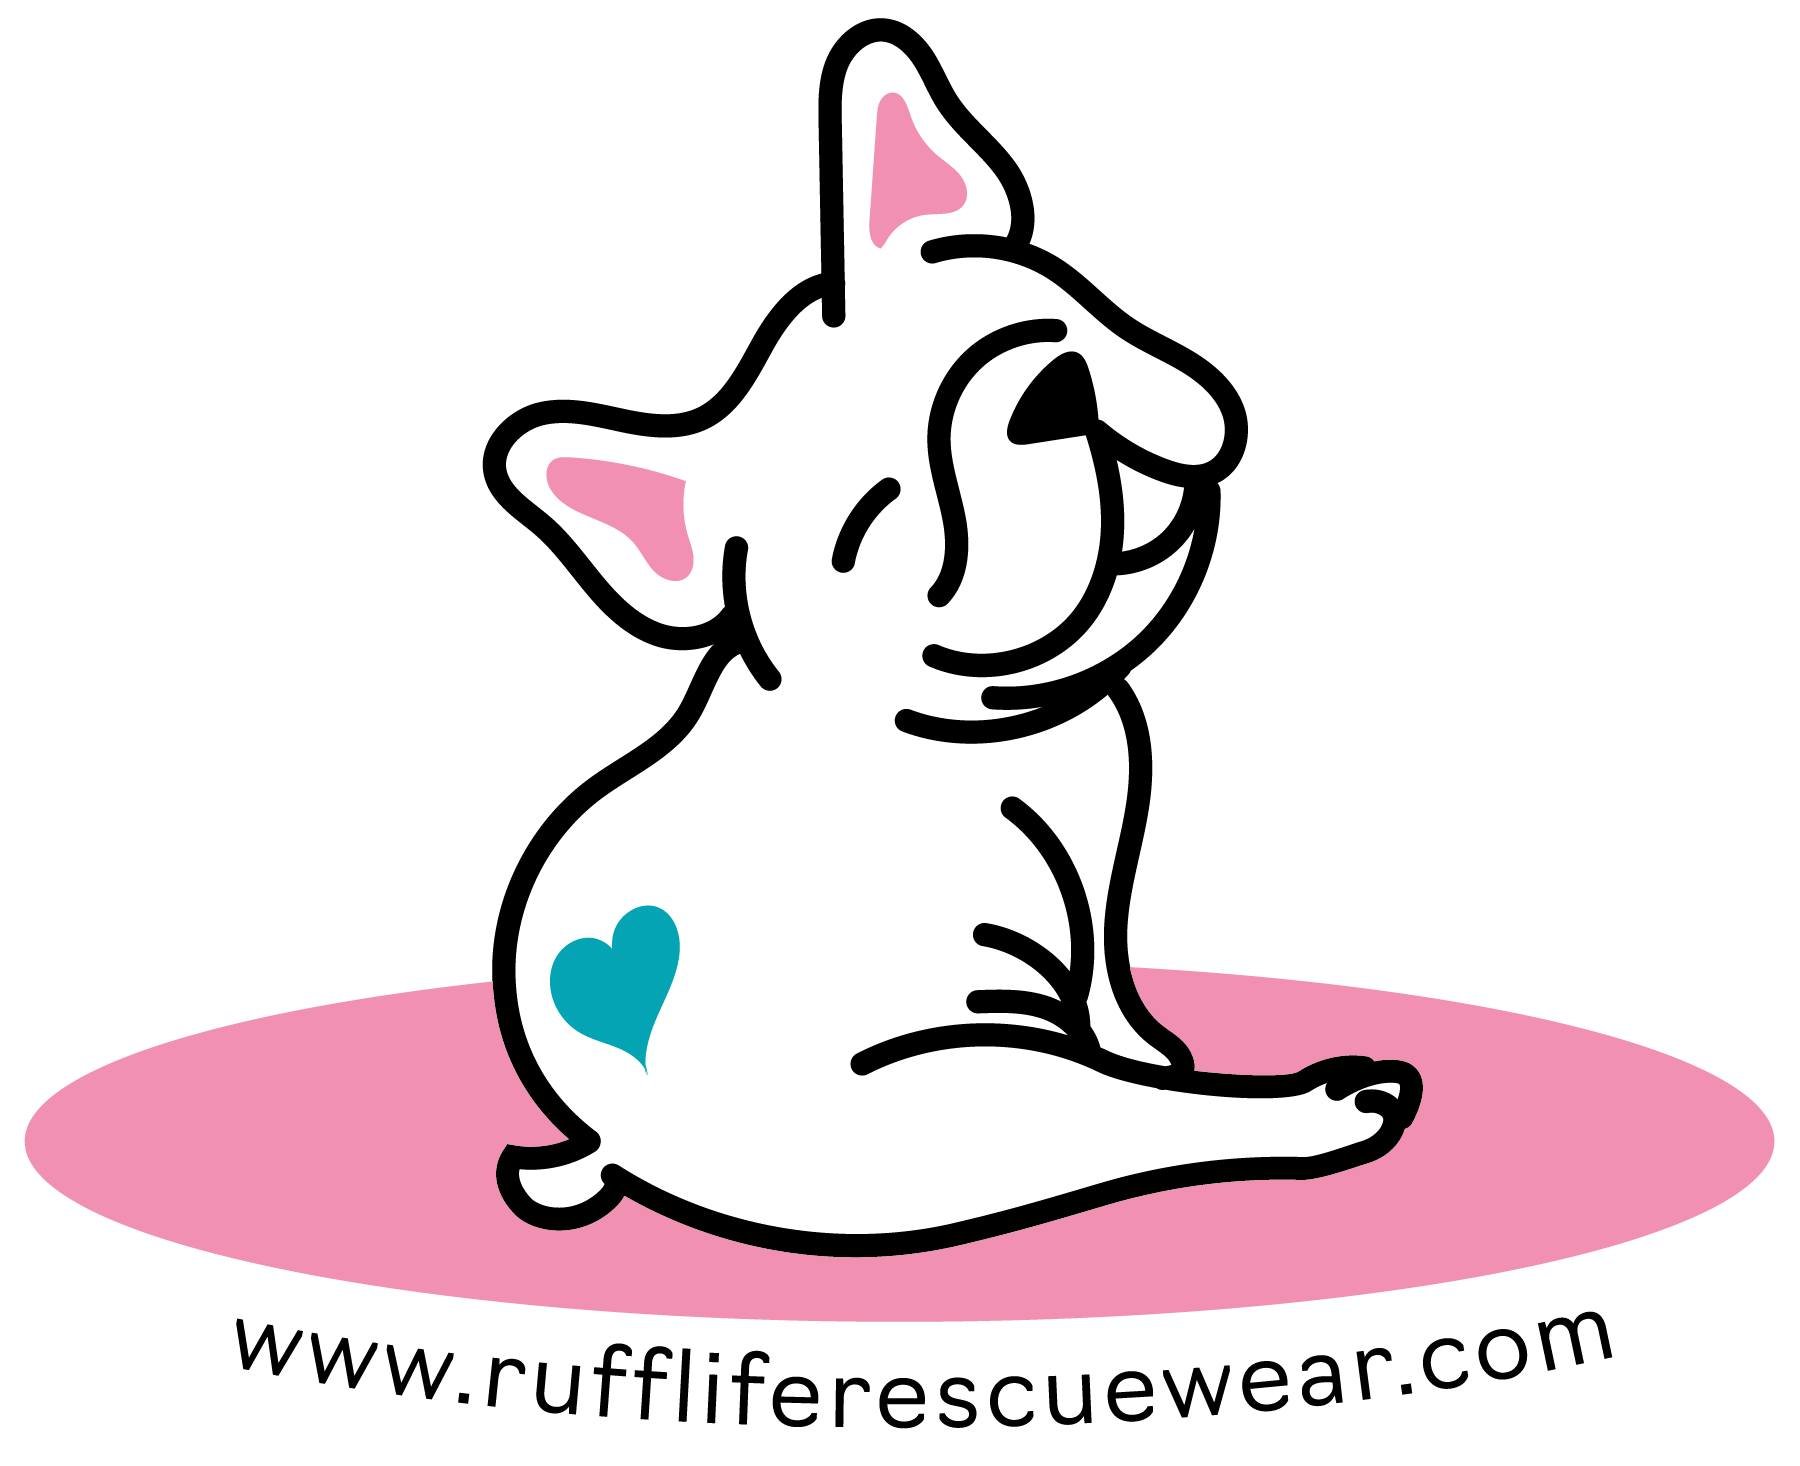 Ruff Life Rescue Wear